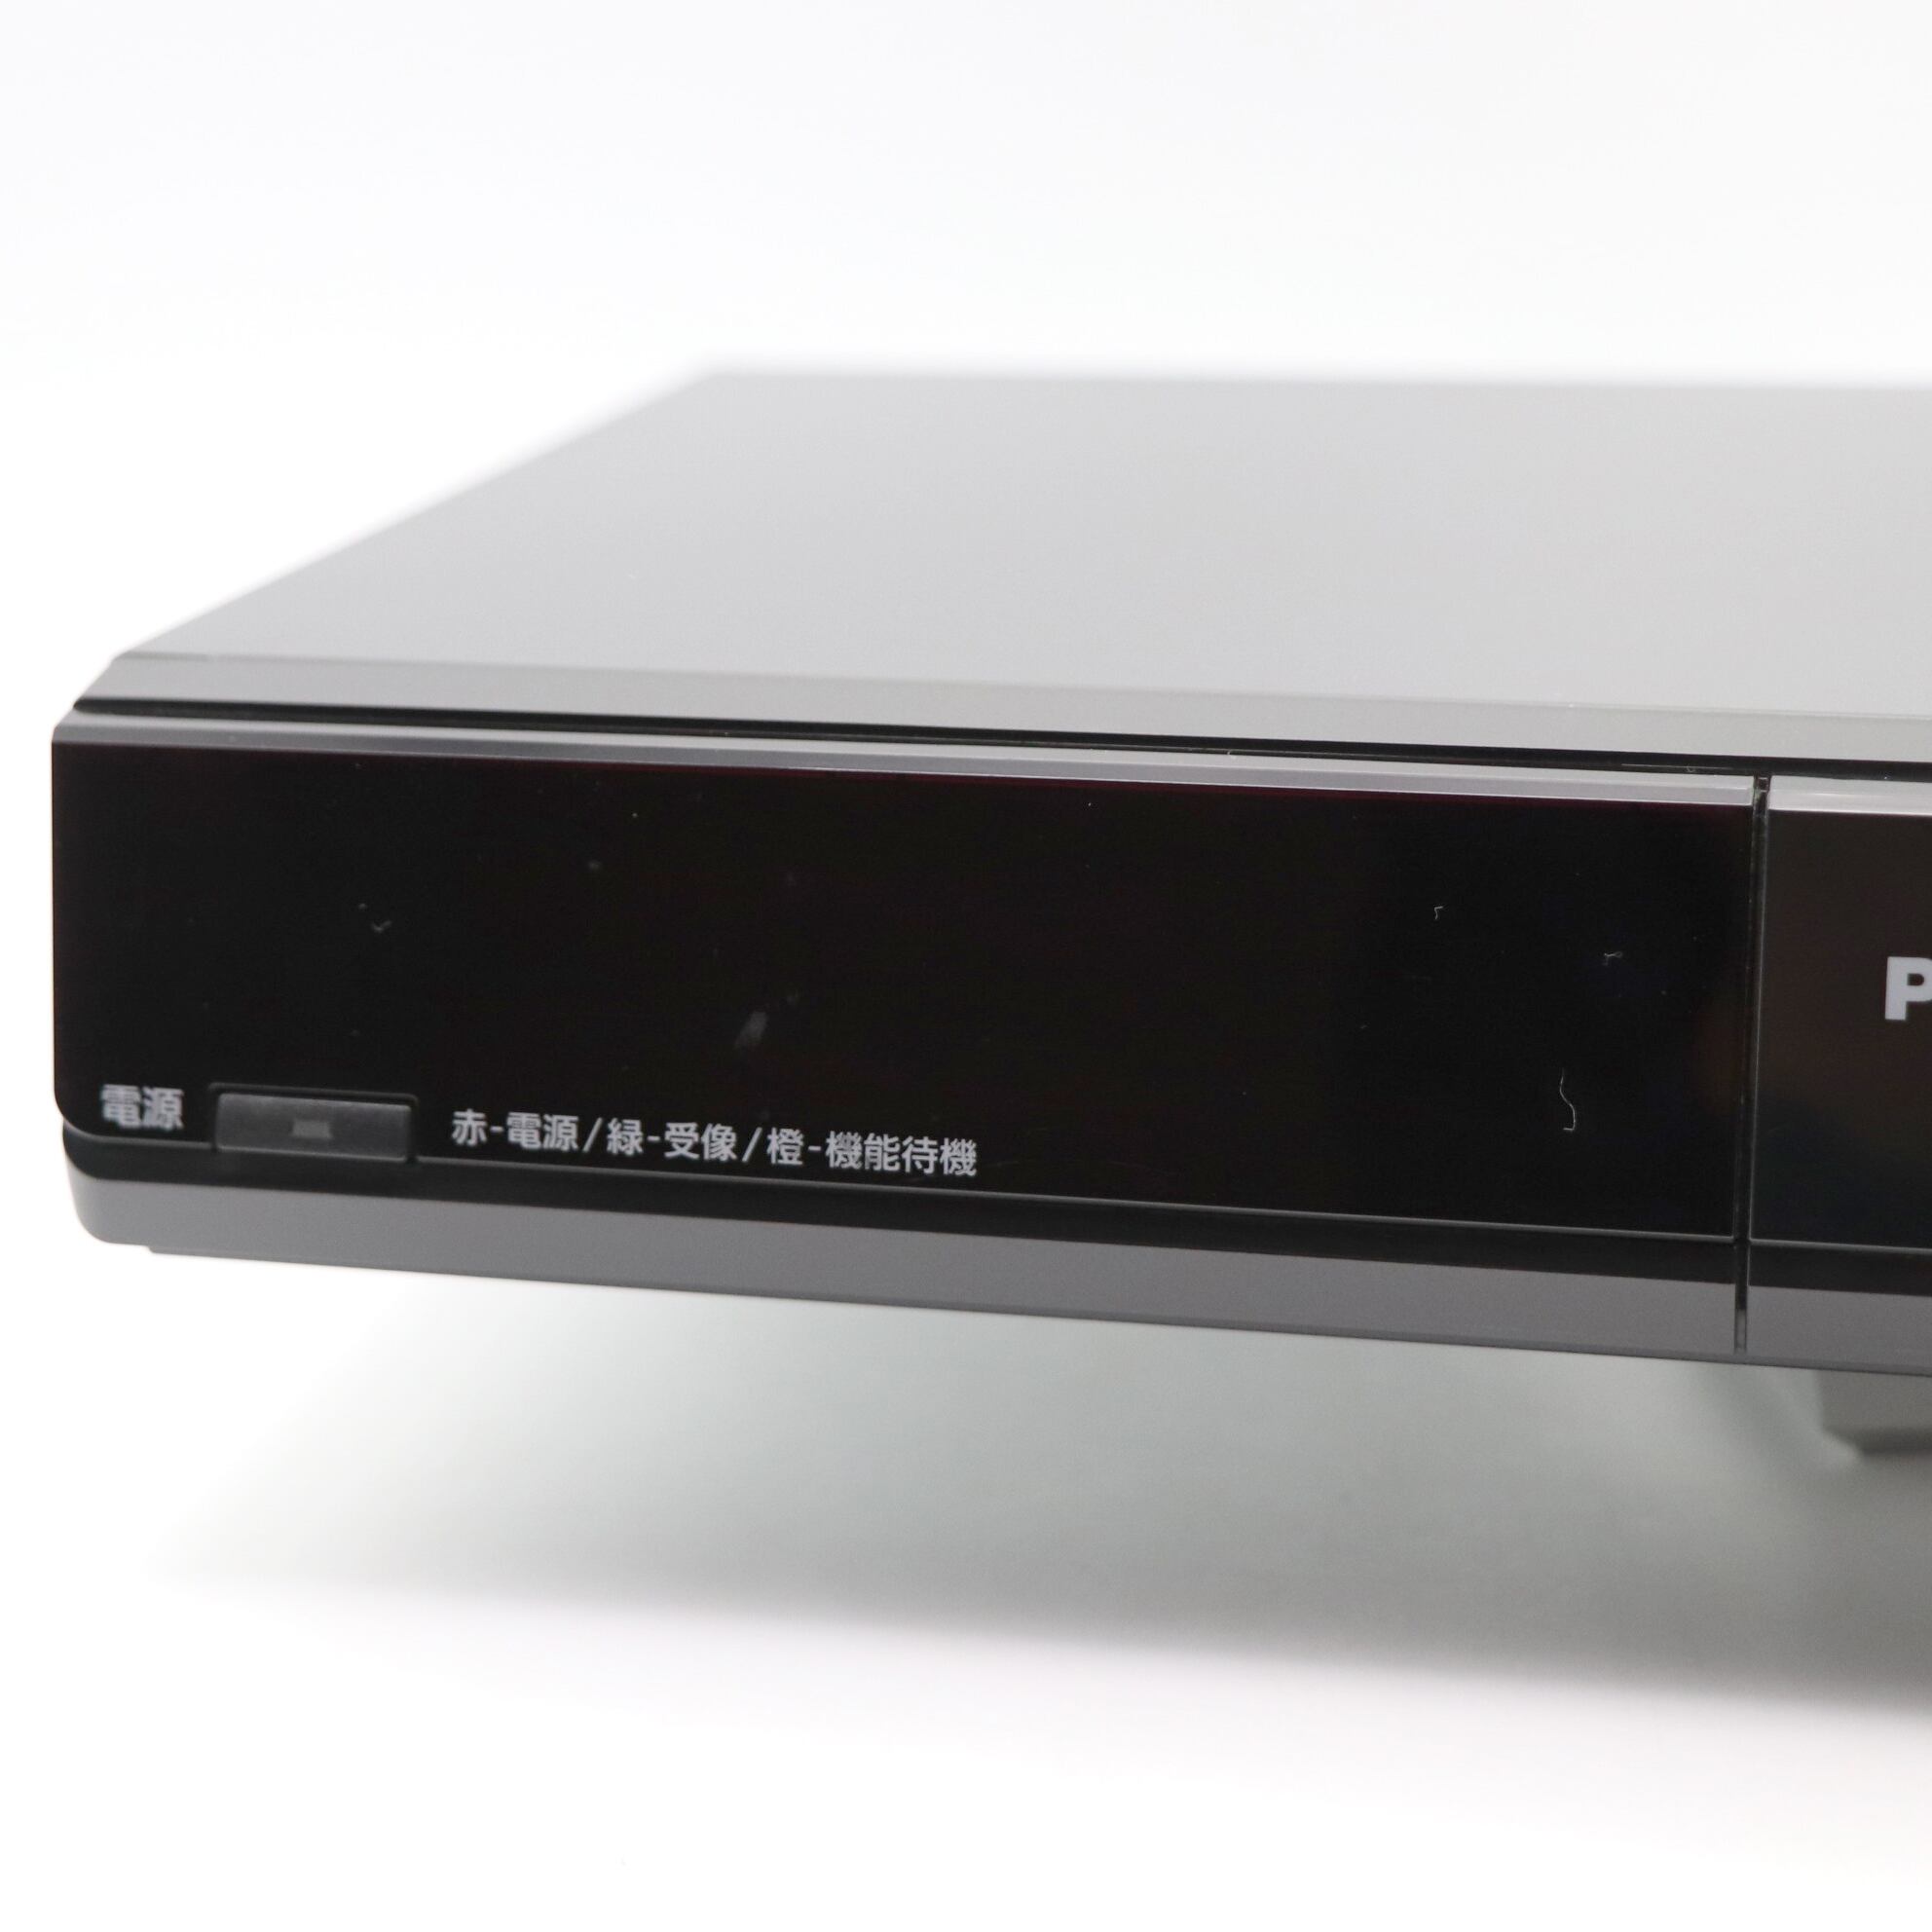 Panasonic・パナソニック・CATV・デジタルセットトップボックス・TZ 